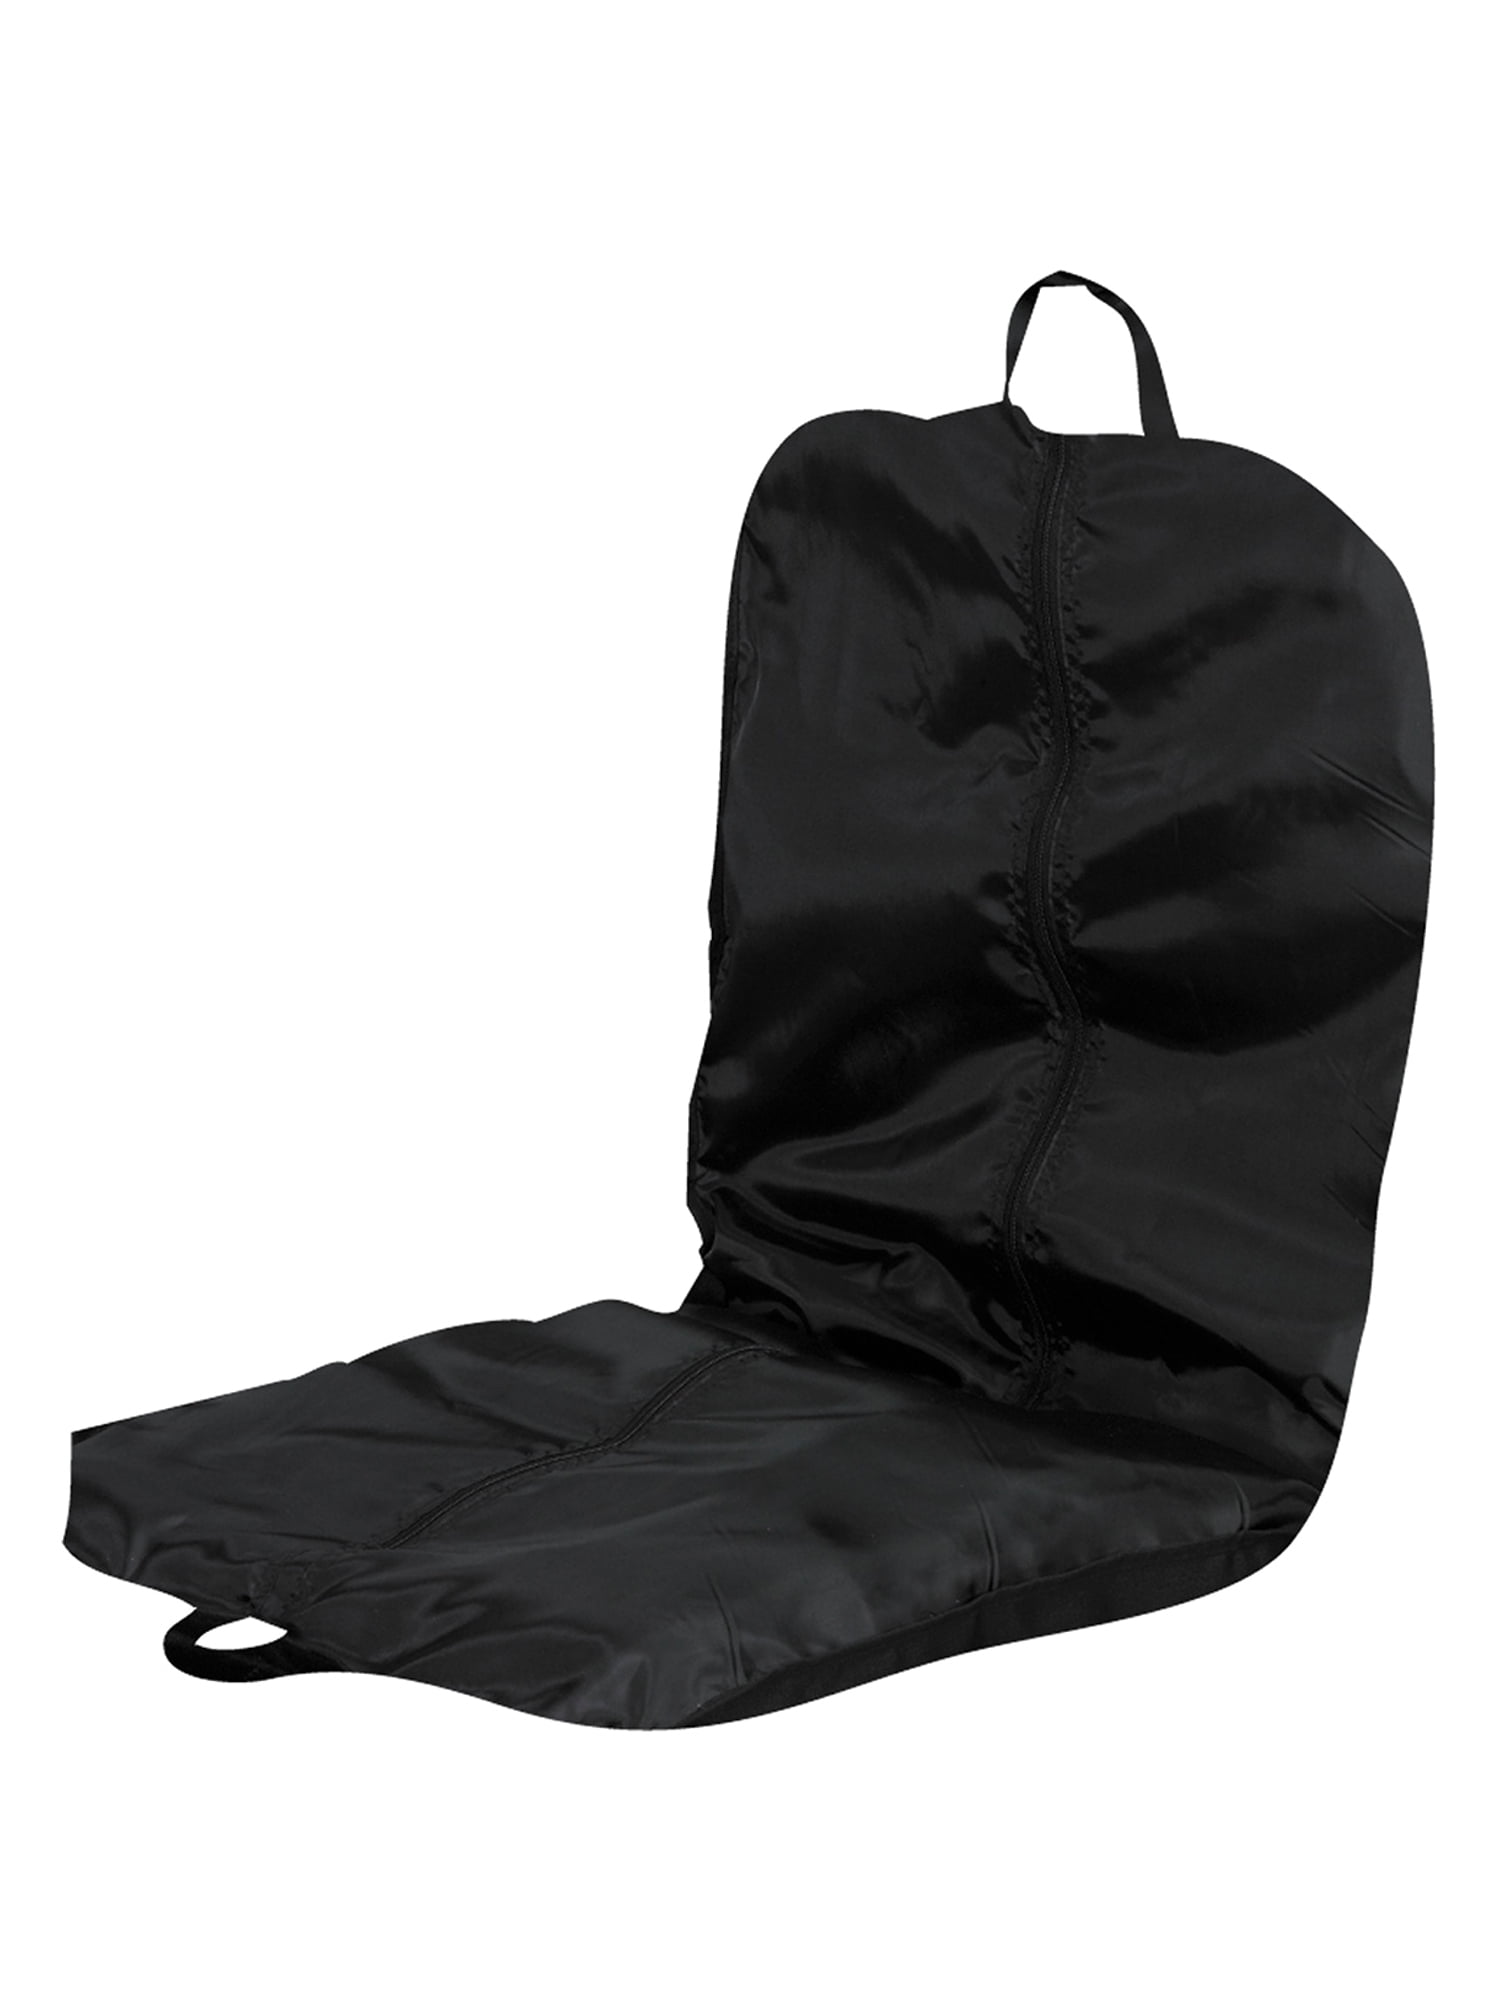 Gusseted Garment Bag - 3-Pack - NEW DESIGN! | Dream Duffel